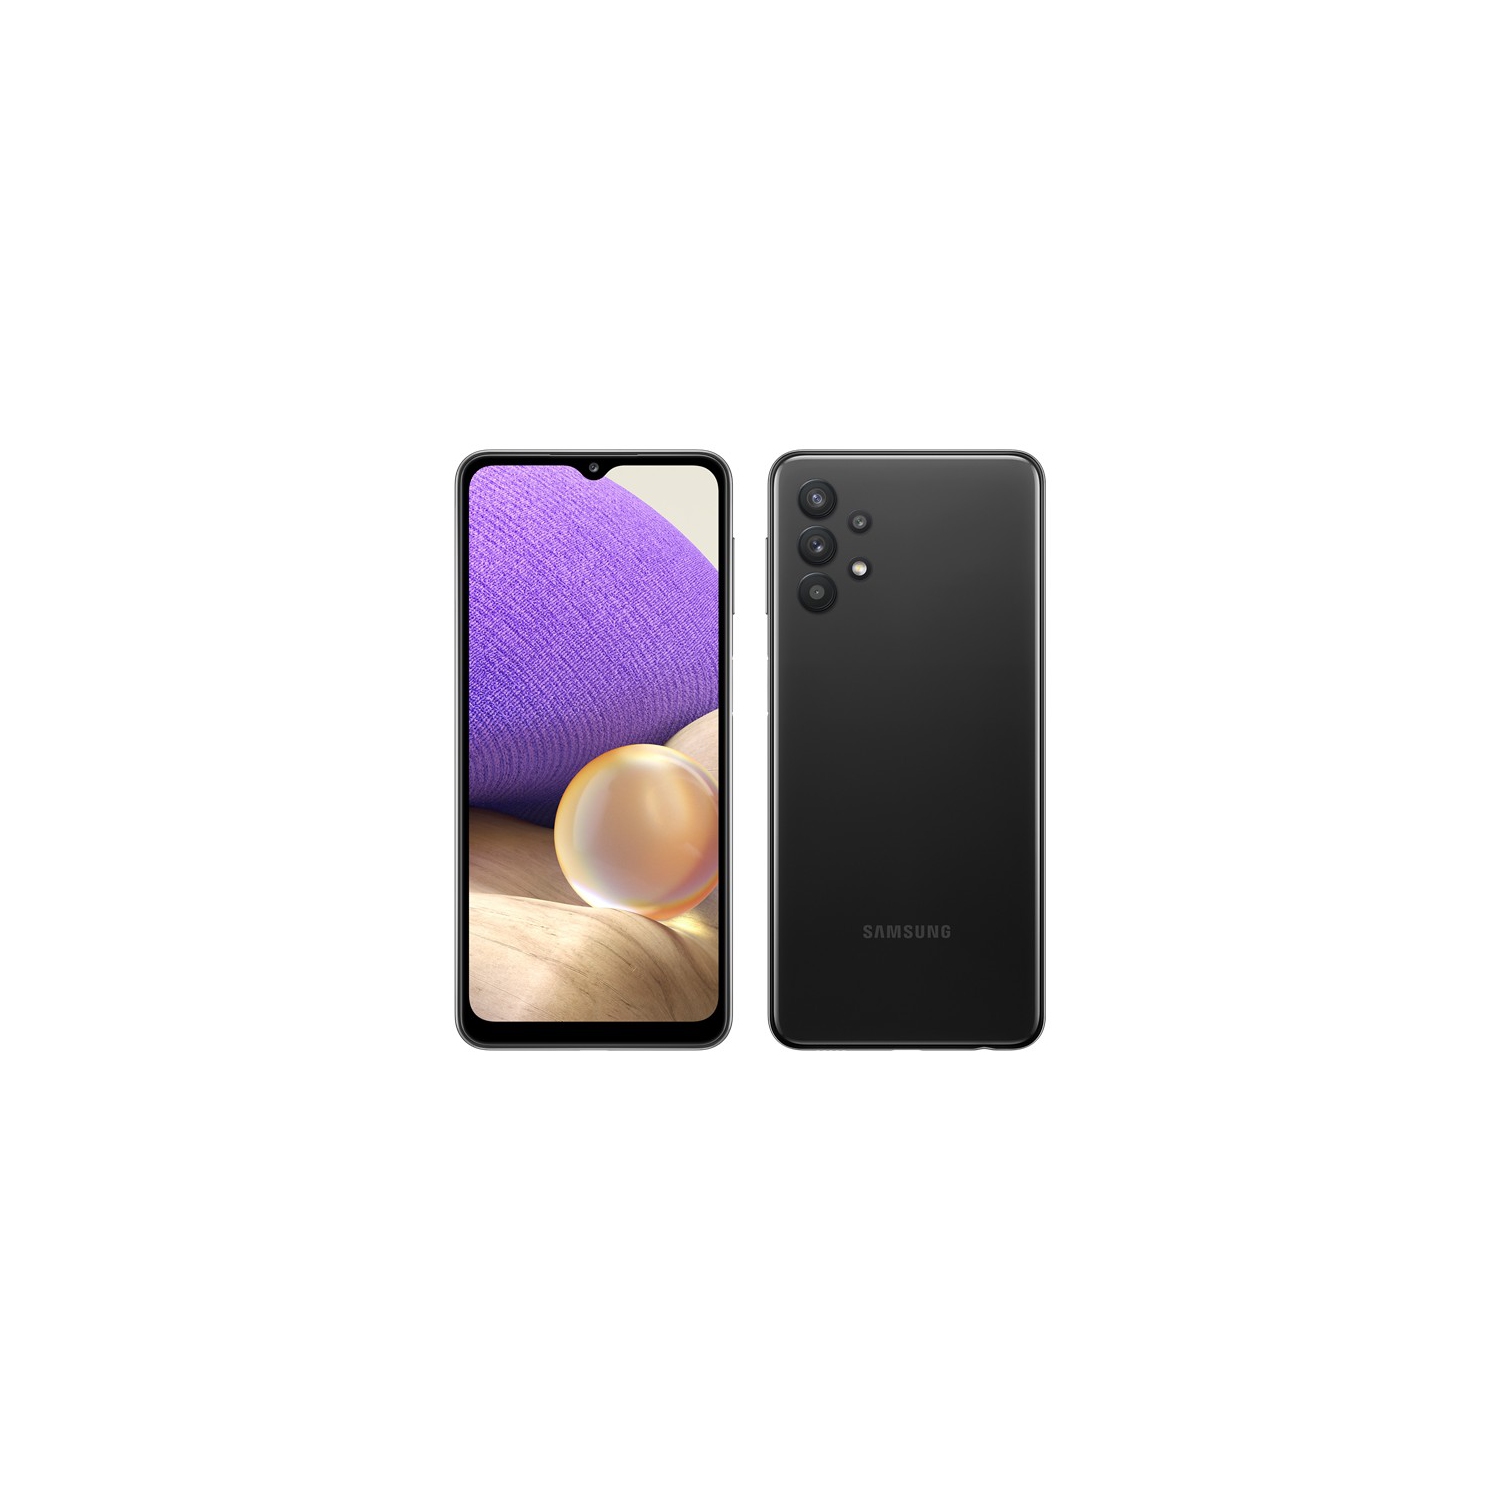 Samsung Galaxy A32 64GB Smartphone - Black - Unlocked Open Box